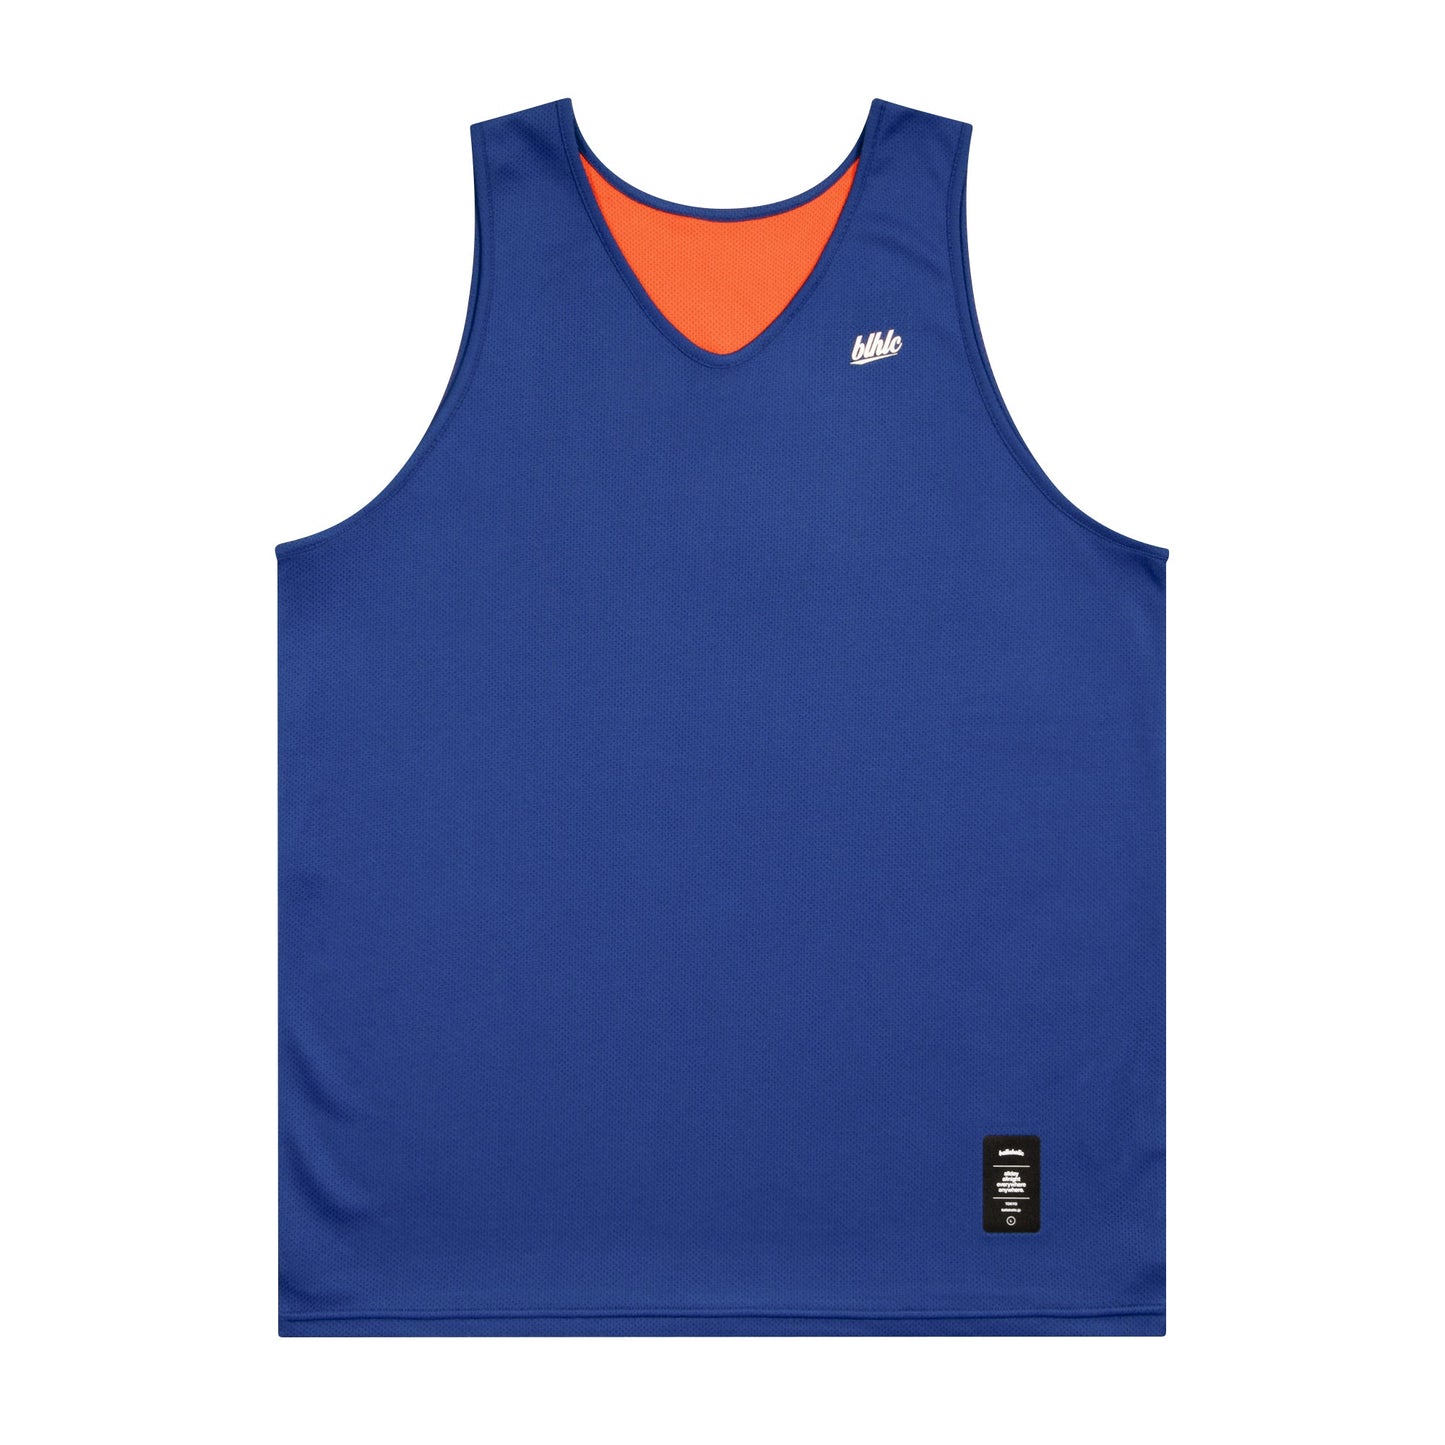 Basic Reversible Jersey (blue/orange) - CUSTOM